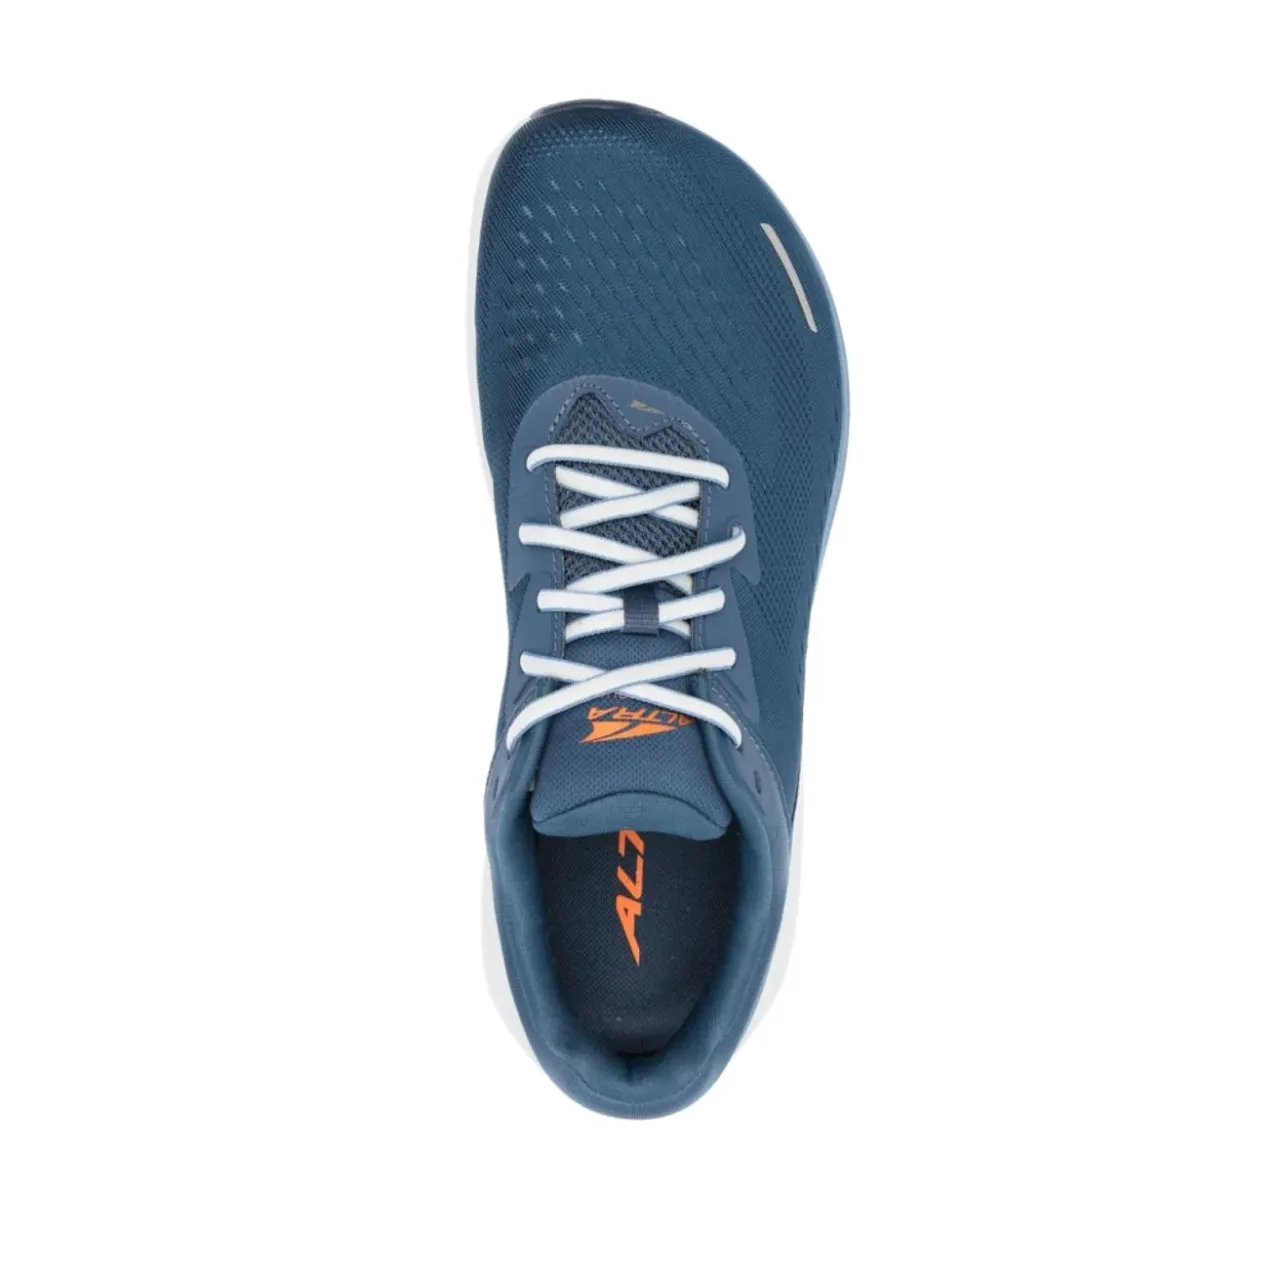 Blaue Mesh-Sneaker mit orangefarbenen Akzenten Altra